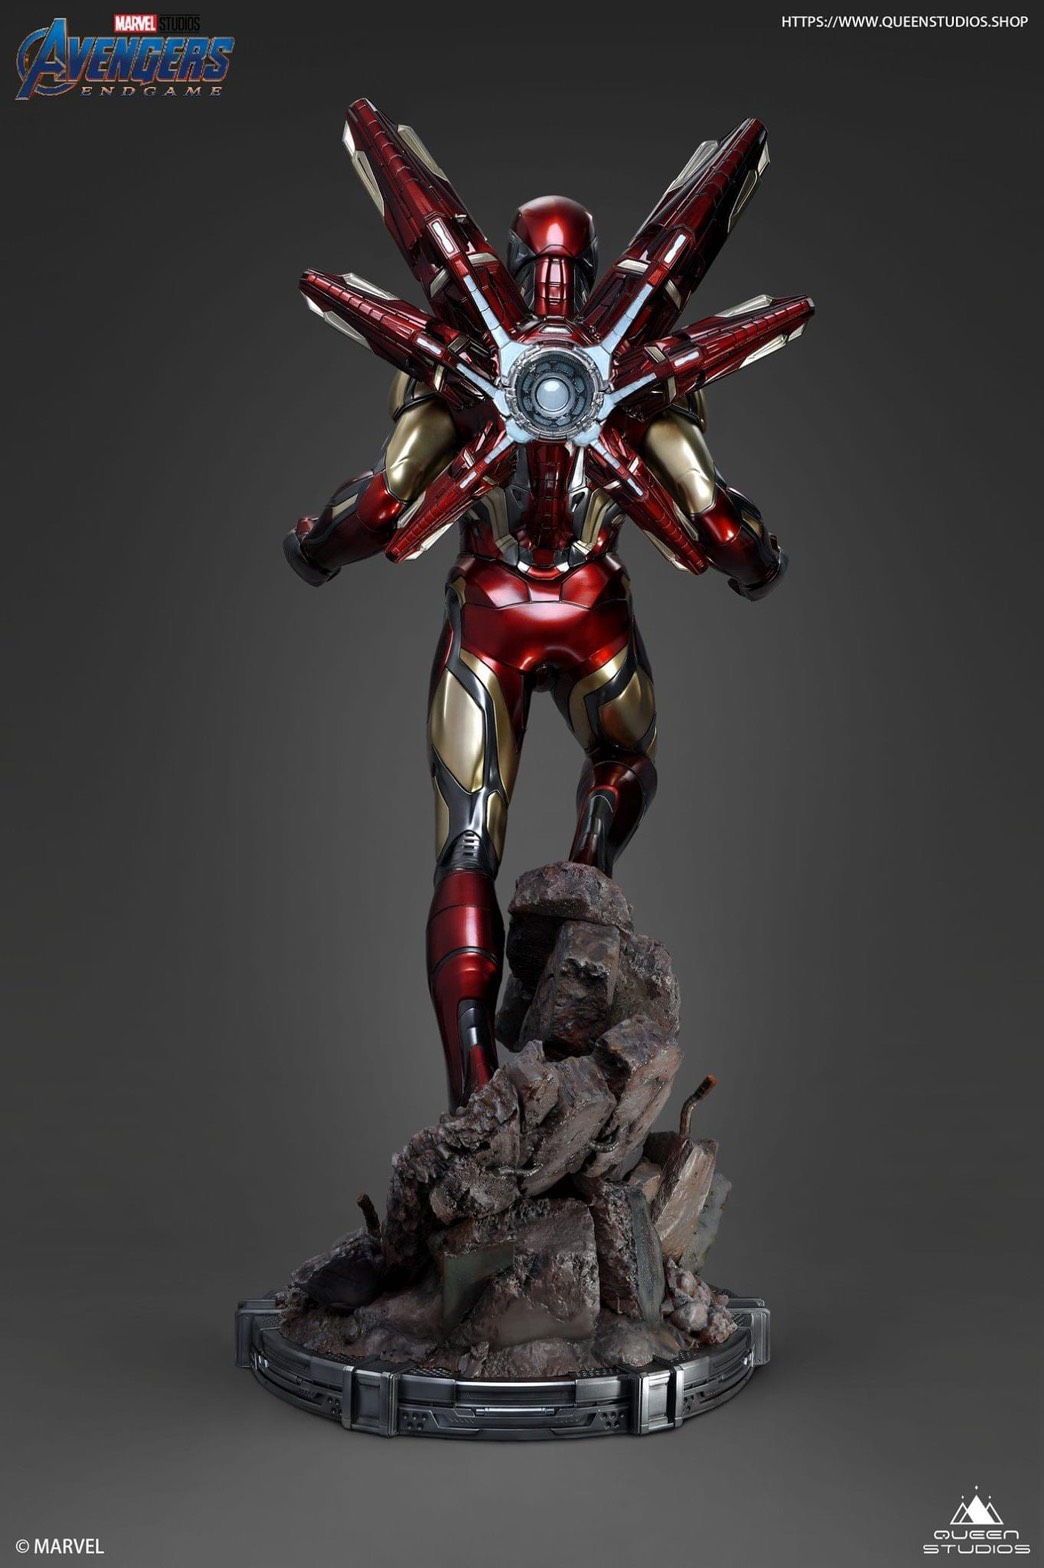 Iron man MK 85 Queen Studio (มัดจำ)